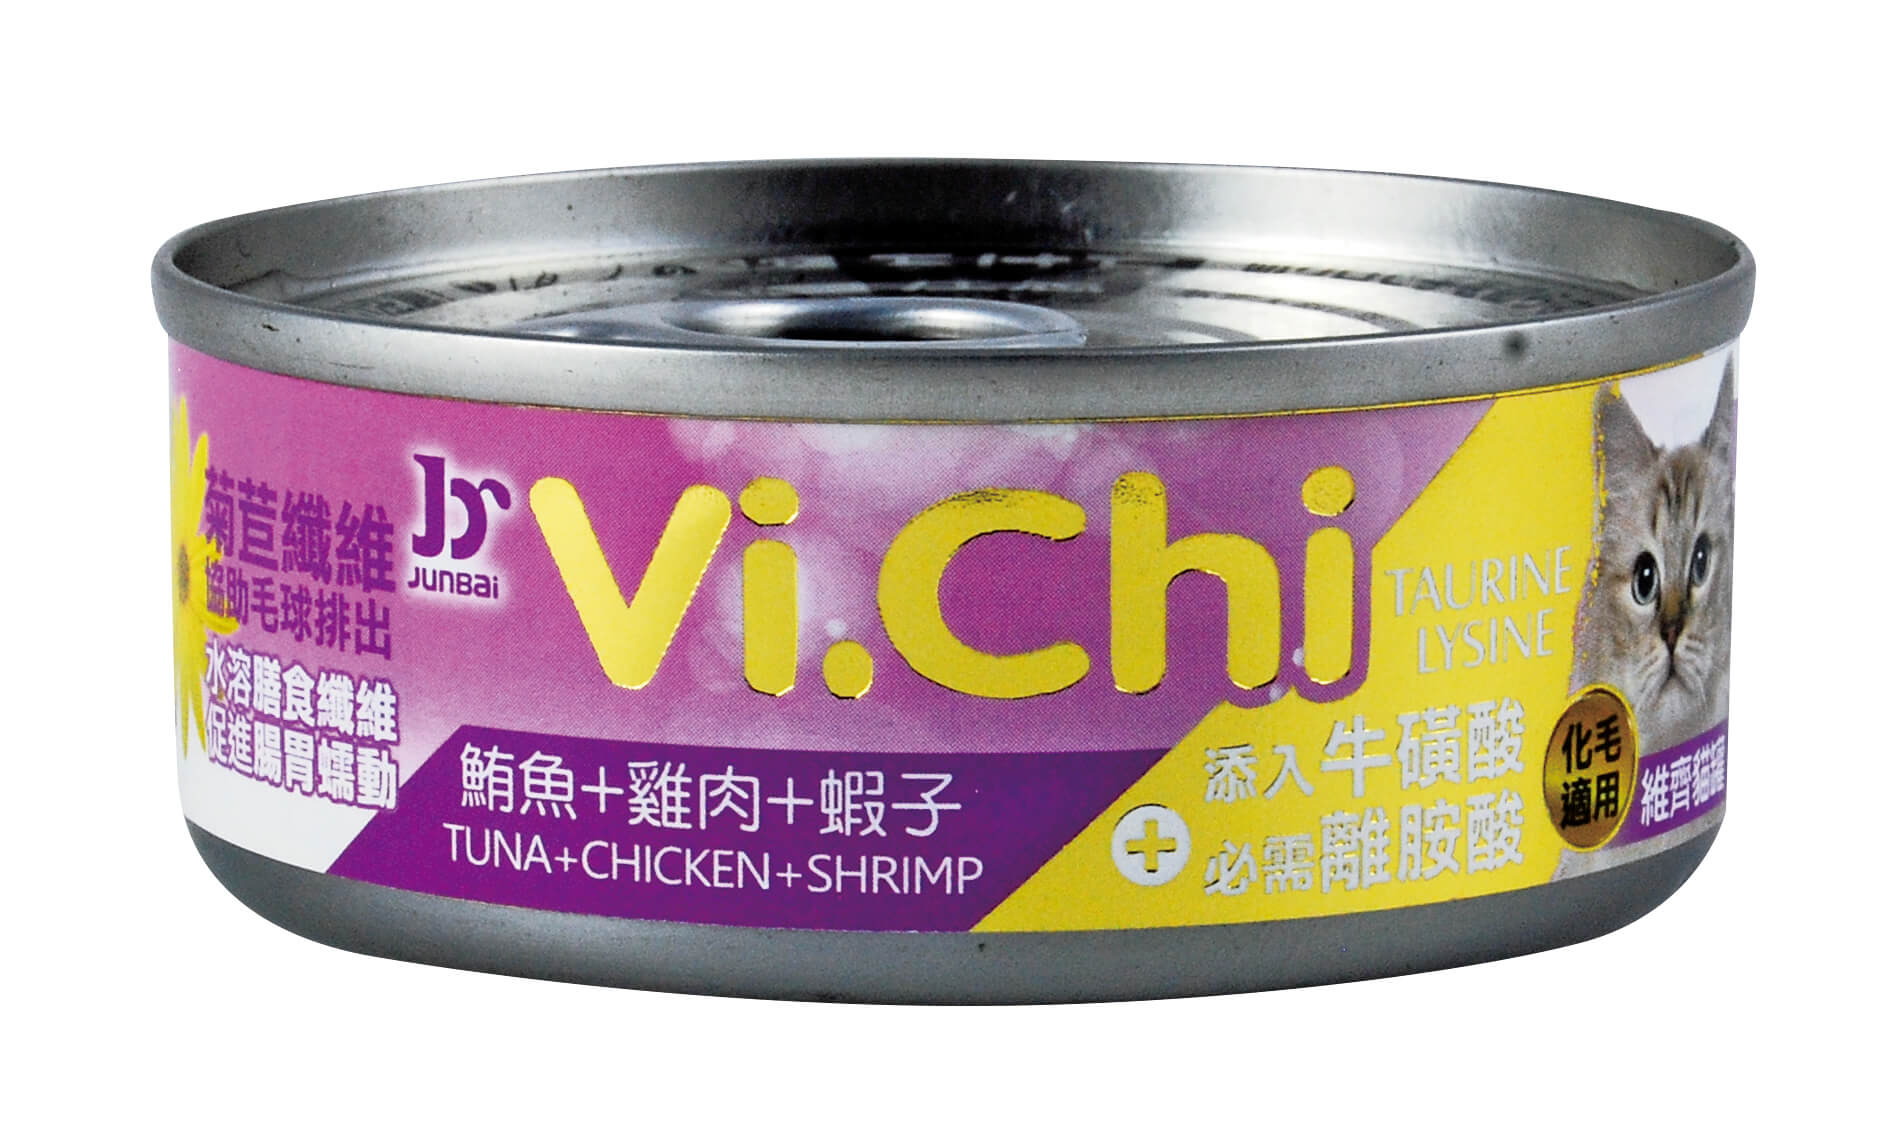 維齊貓罐-鮪魚+雞肉+蝦子
Vi.Chi cat can-tuna+chicken+shrimp